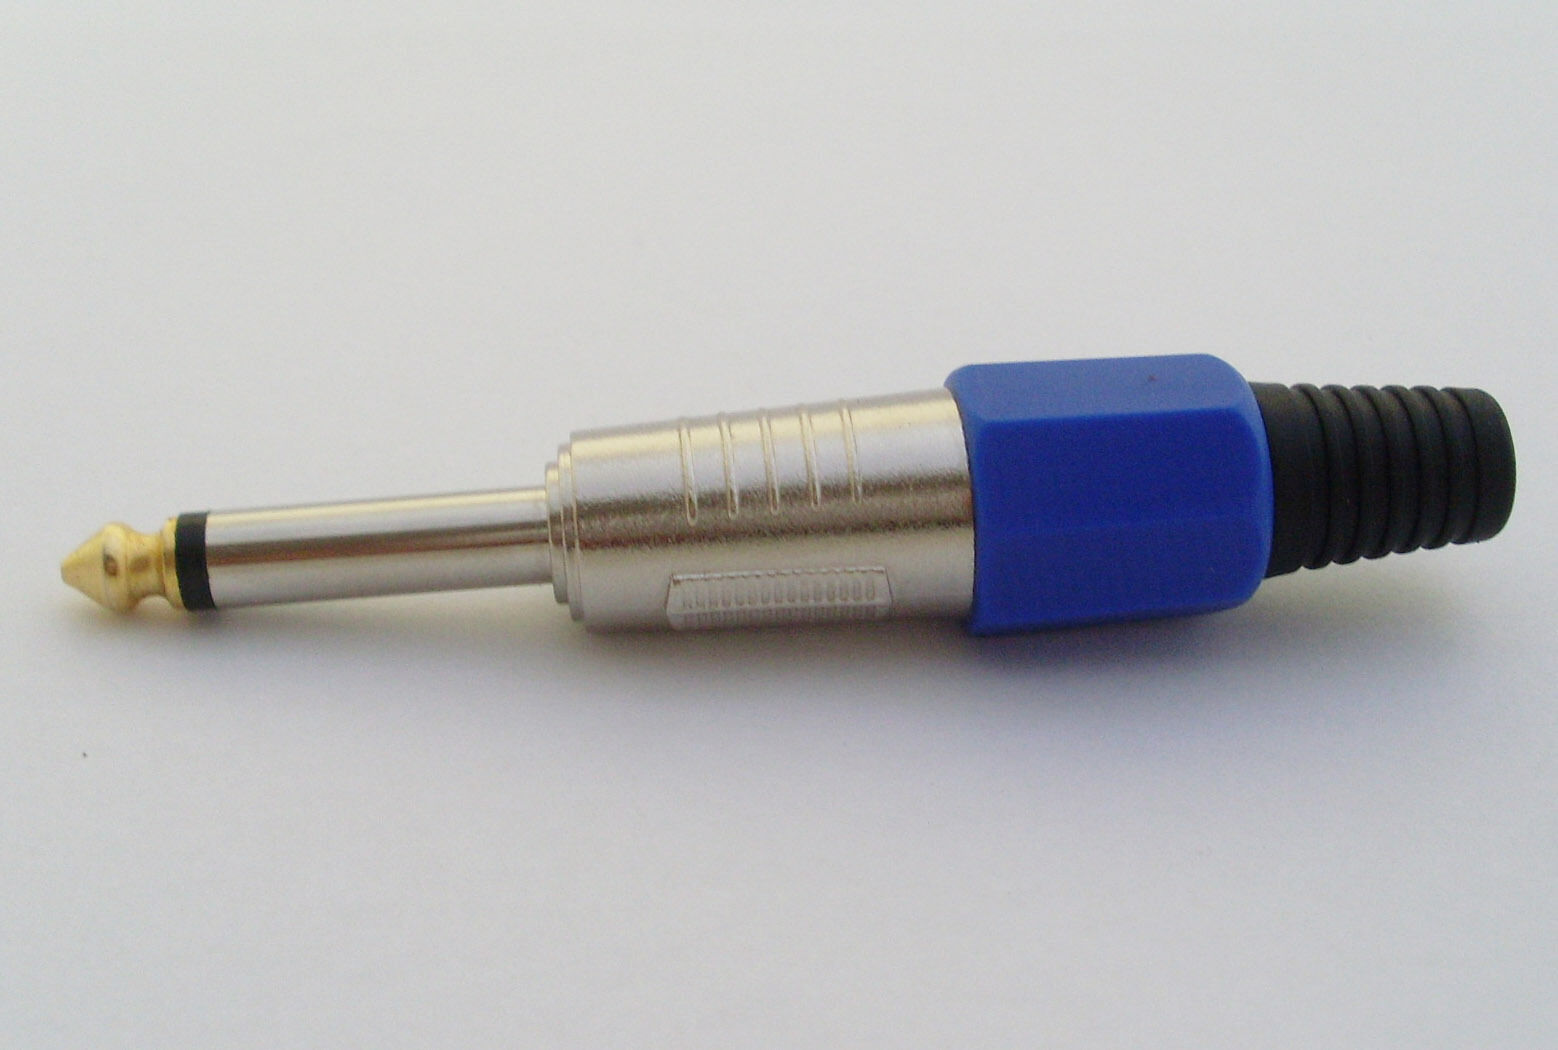 40pcs 6.35mm 1/4" MONO Metal Audio Male Plug with Blue/Black Plastic